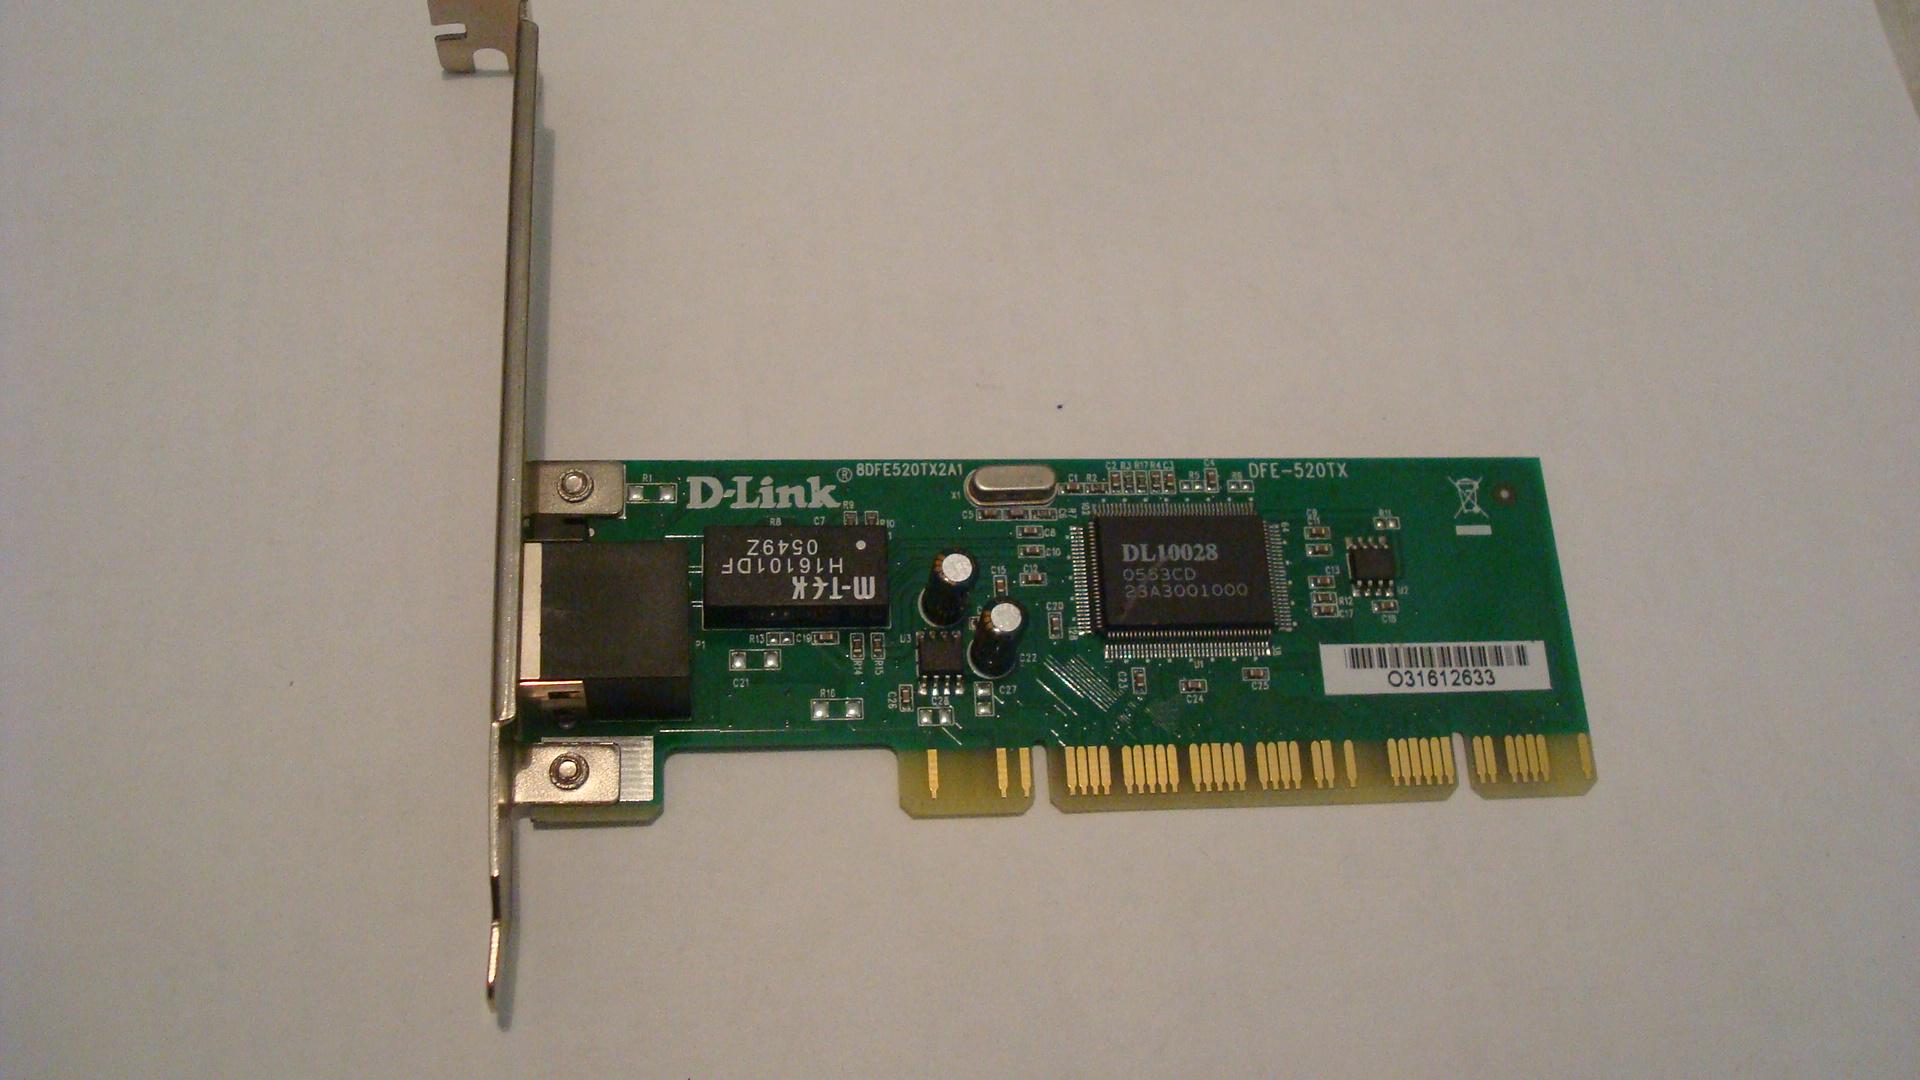 D link dfe 520tx. DFE-520tx. D link 8dfe520tx. D-link DFE-680tx. Адаптер сетевой d-link DFE-520tx 32 bit 10/100 PCI.